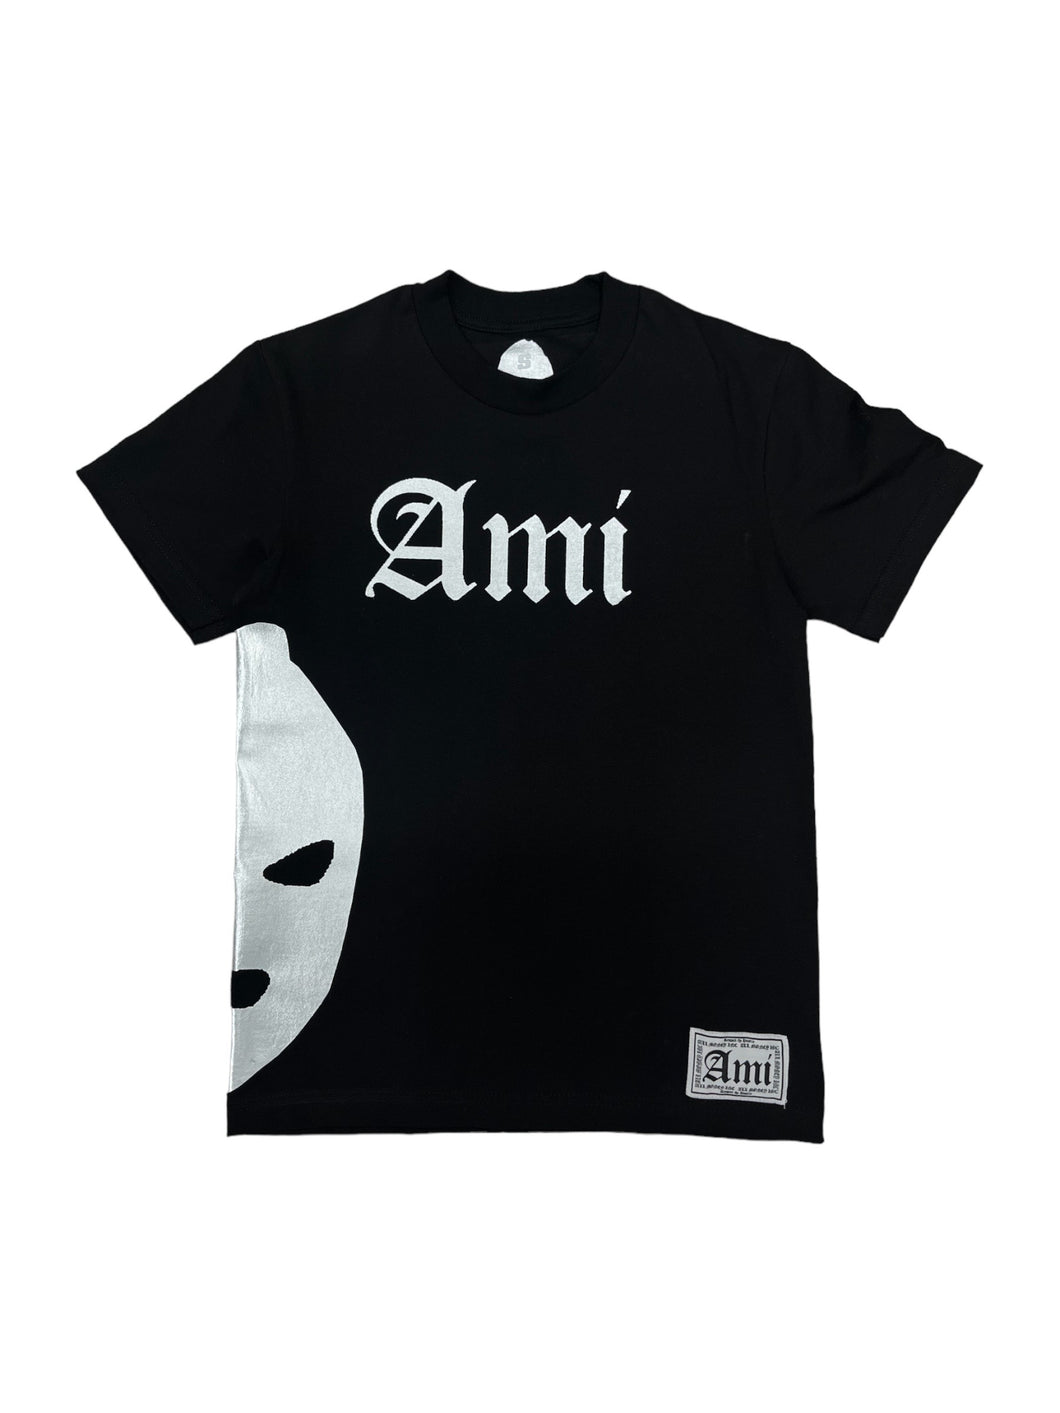 AMI (Goons) T-shirt